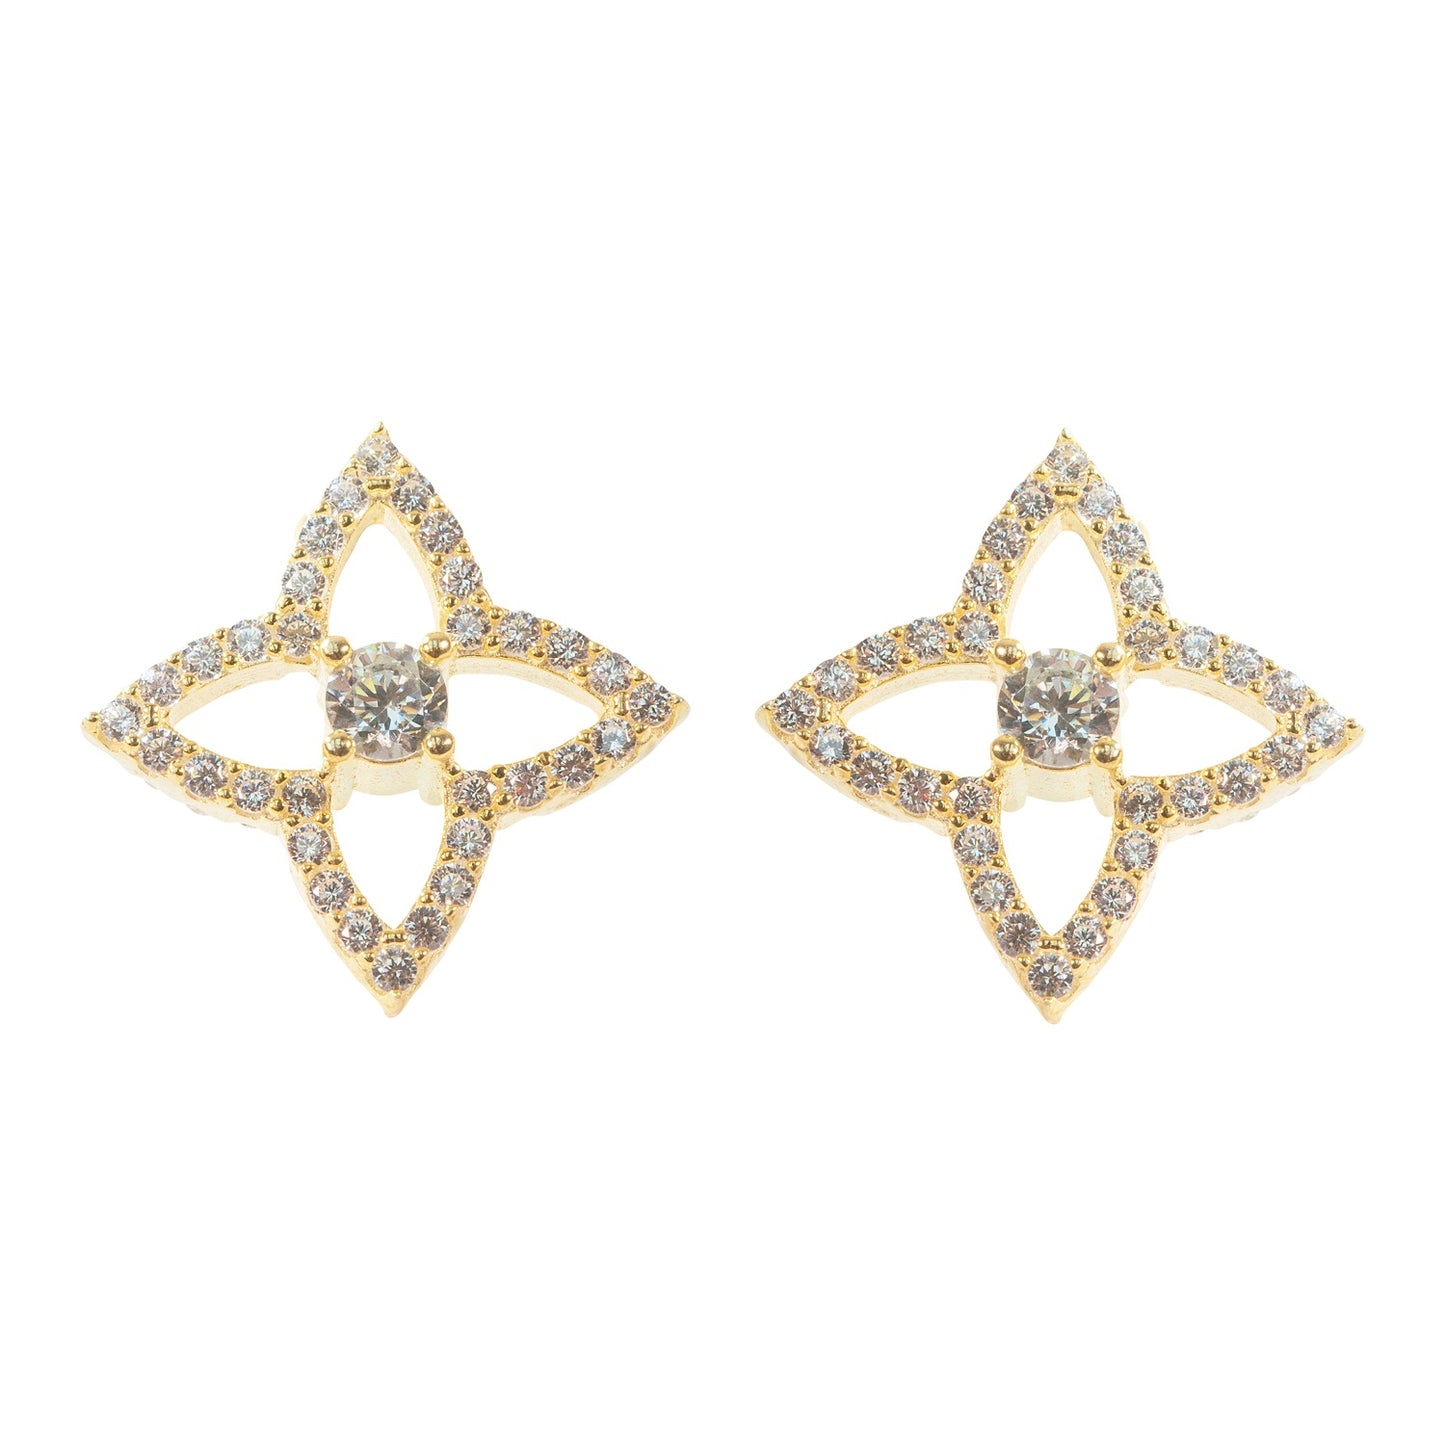 Quatrefoil Flower Crystal Stud Earrings *New*